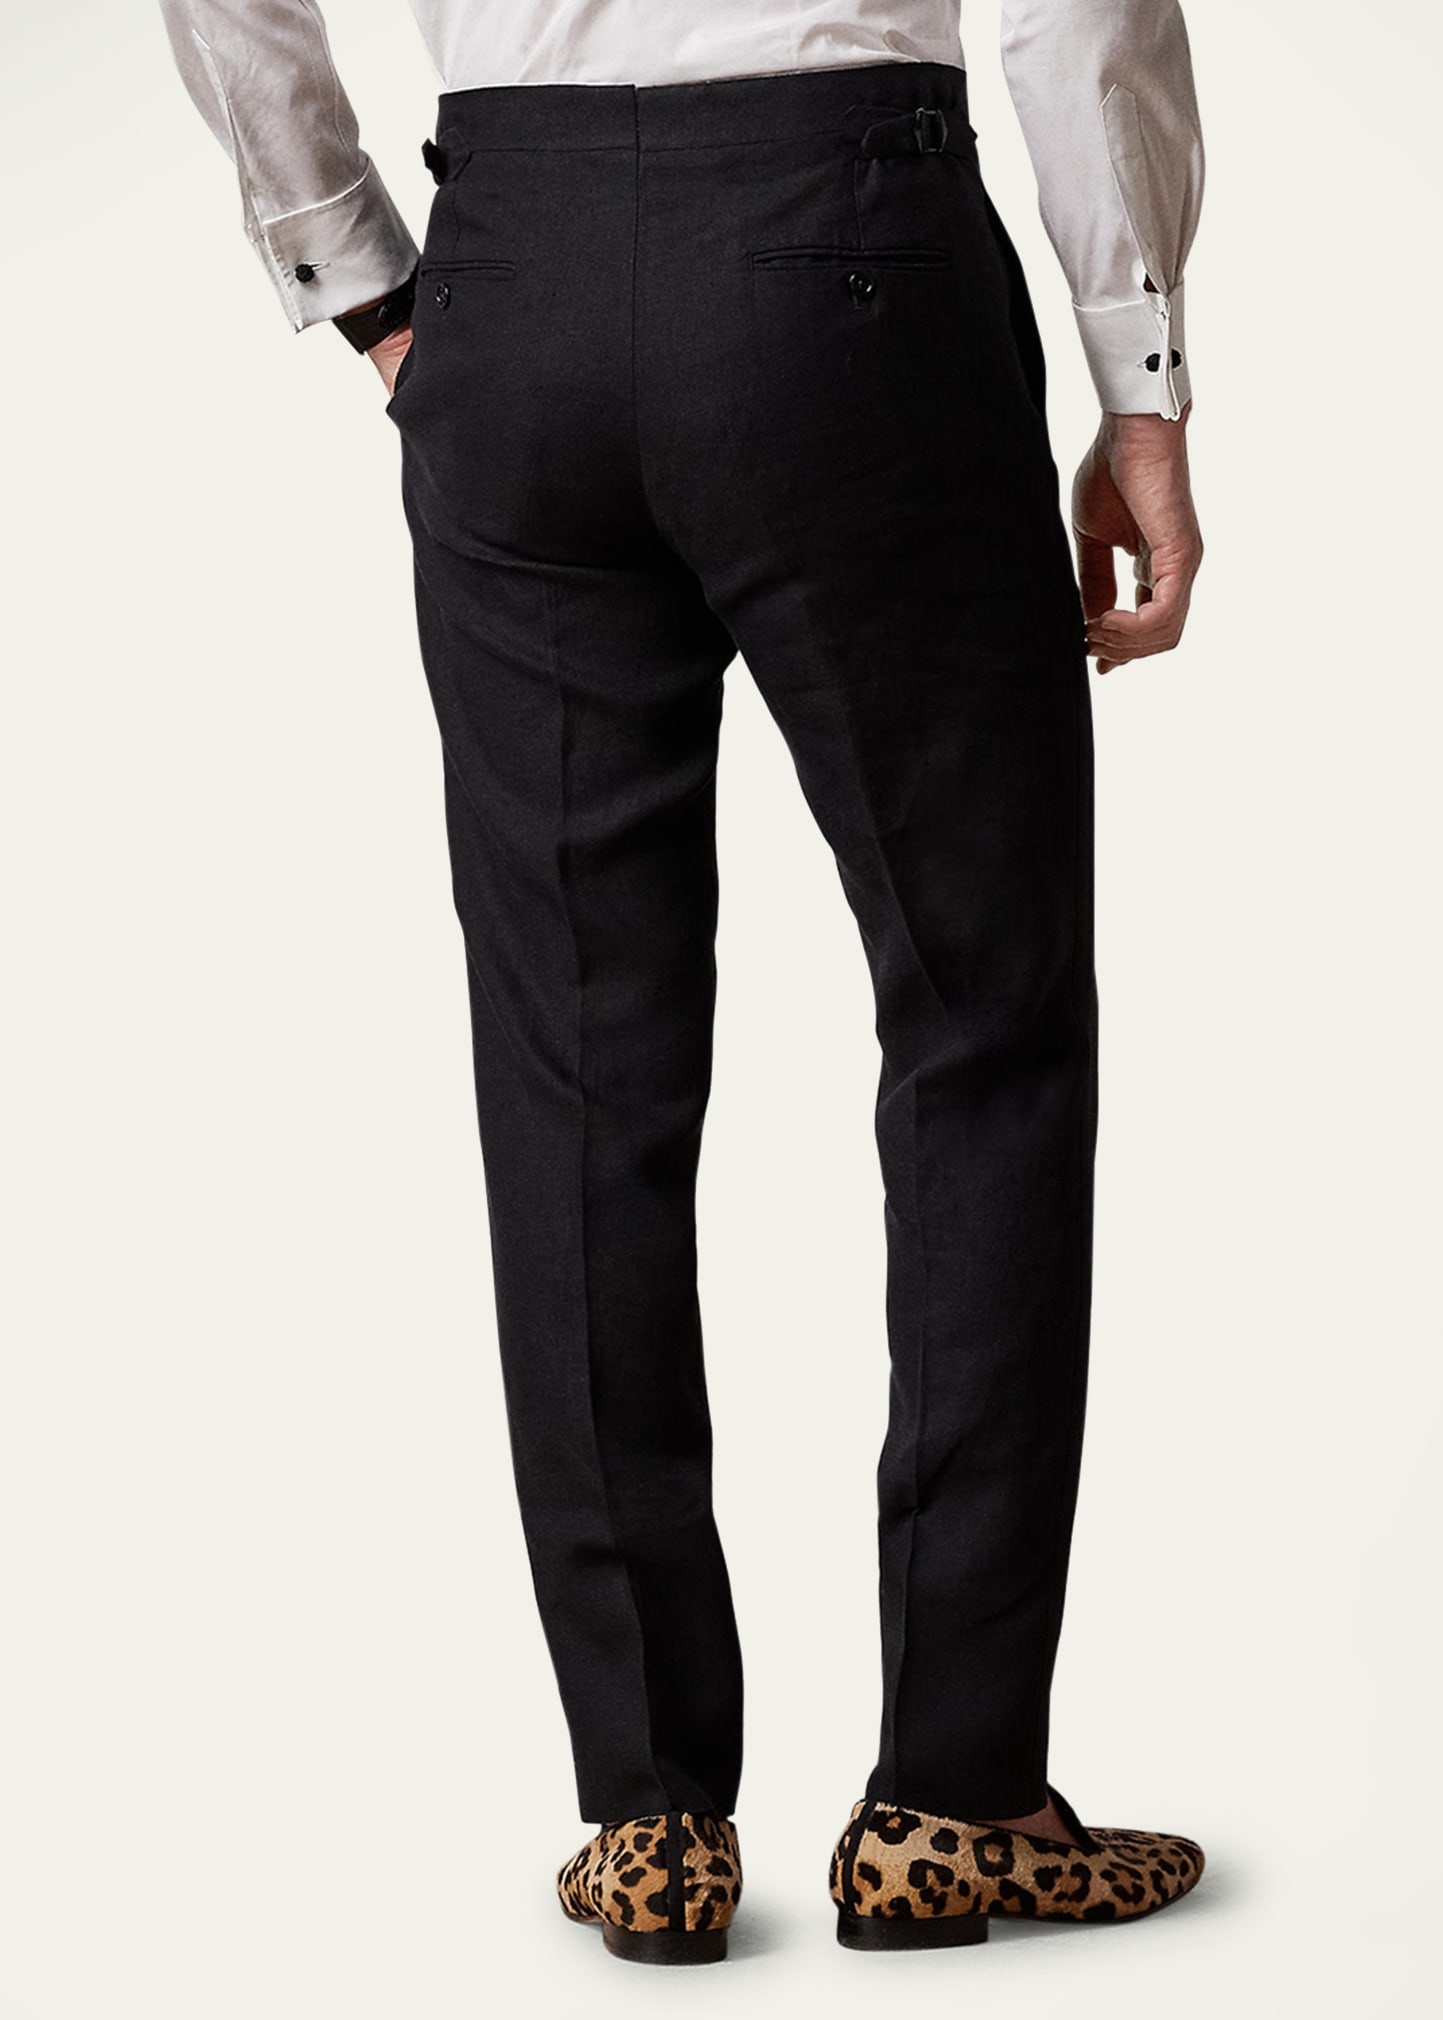 Men's Gregory Hand-Tailored Tuxedo Pants - 3